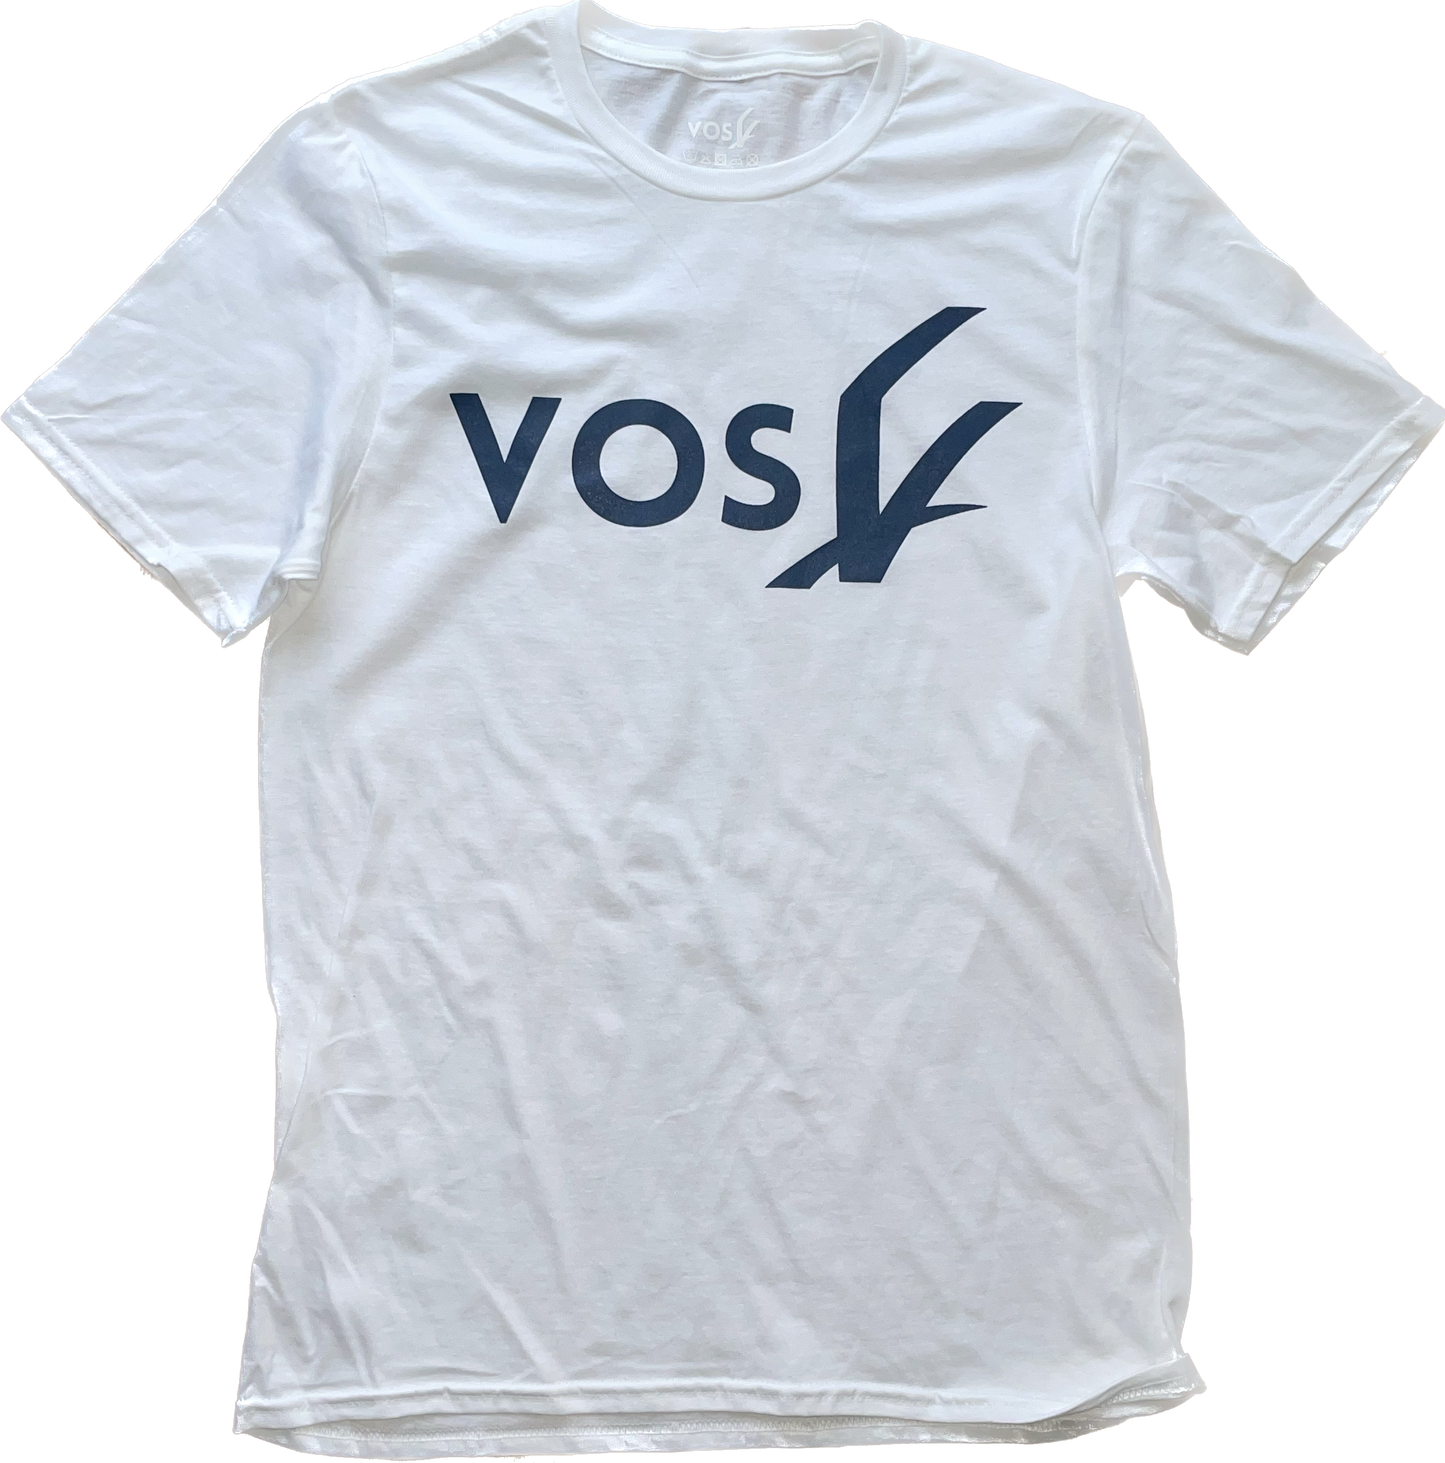 VOS 1.0 T-Shirt